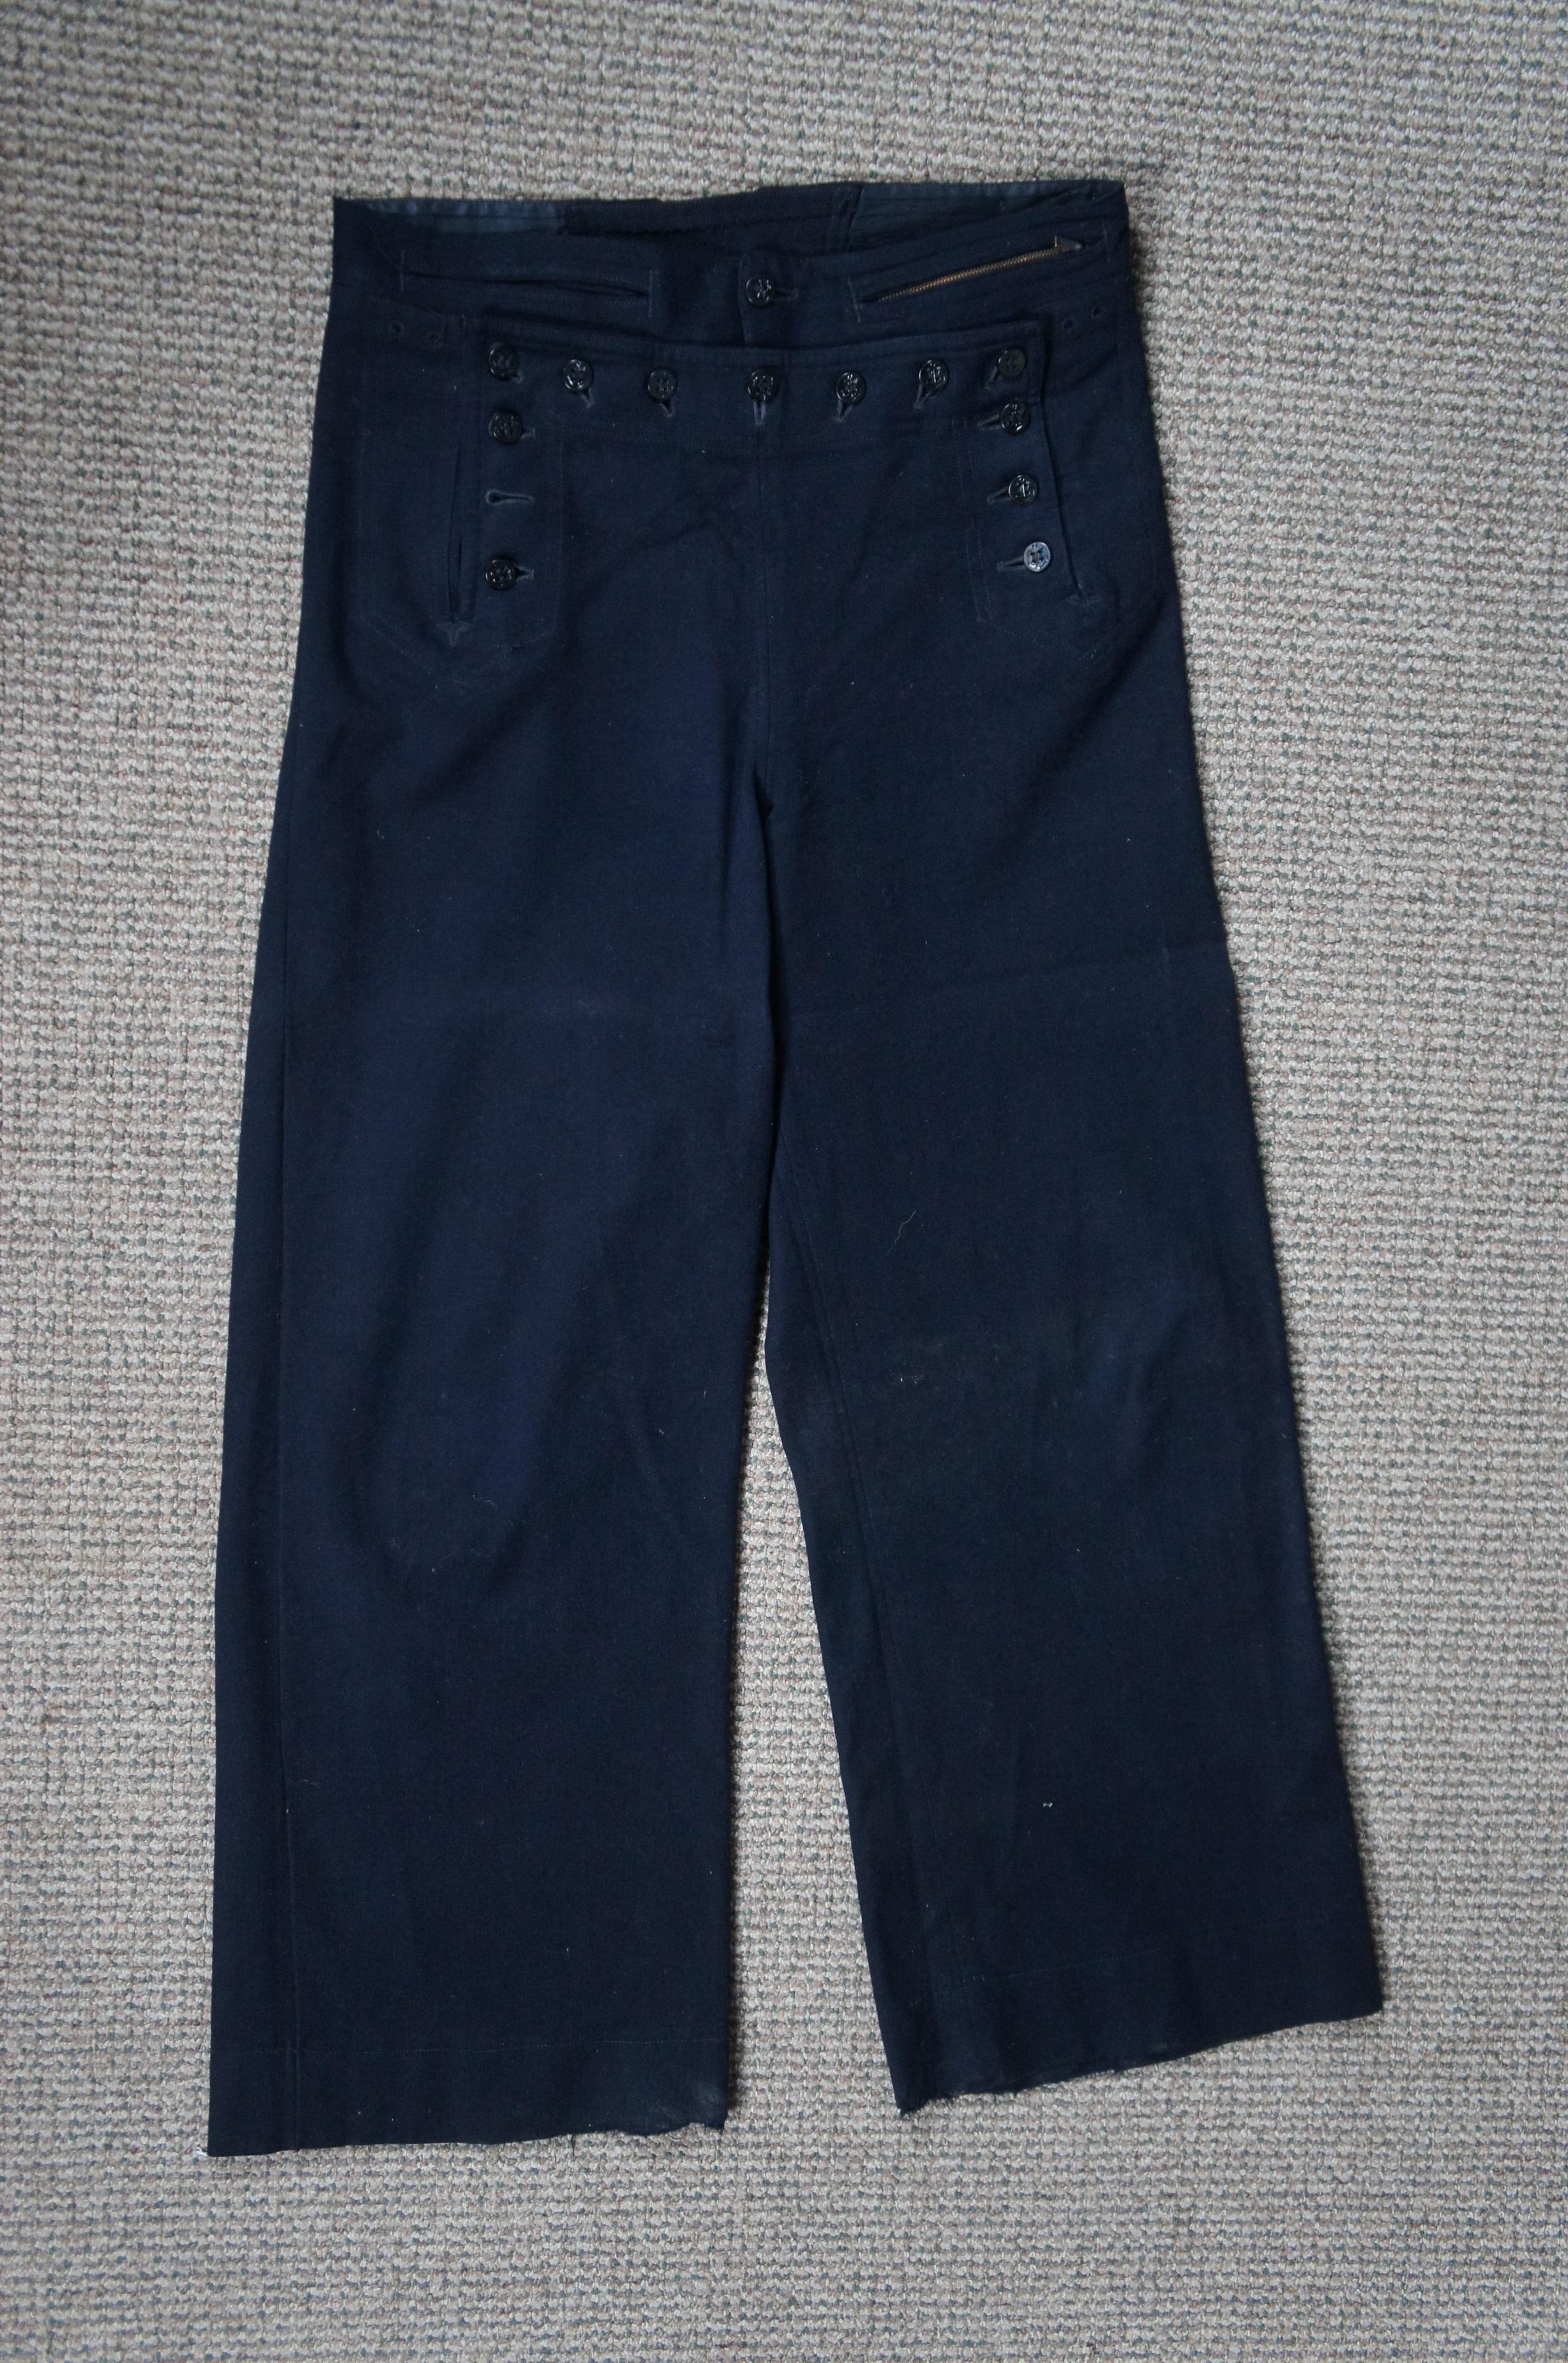 3 Pc Mid Century US Navy Blue Wool Uniform Jumper Pants Cracker Jack For Sale 3